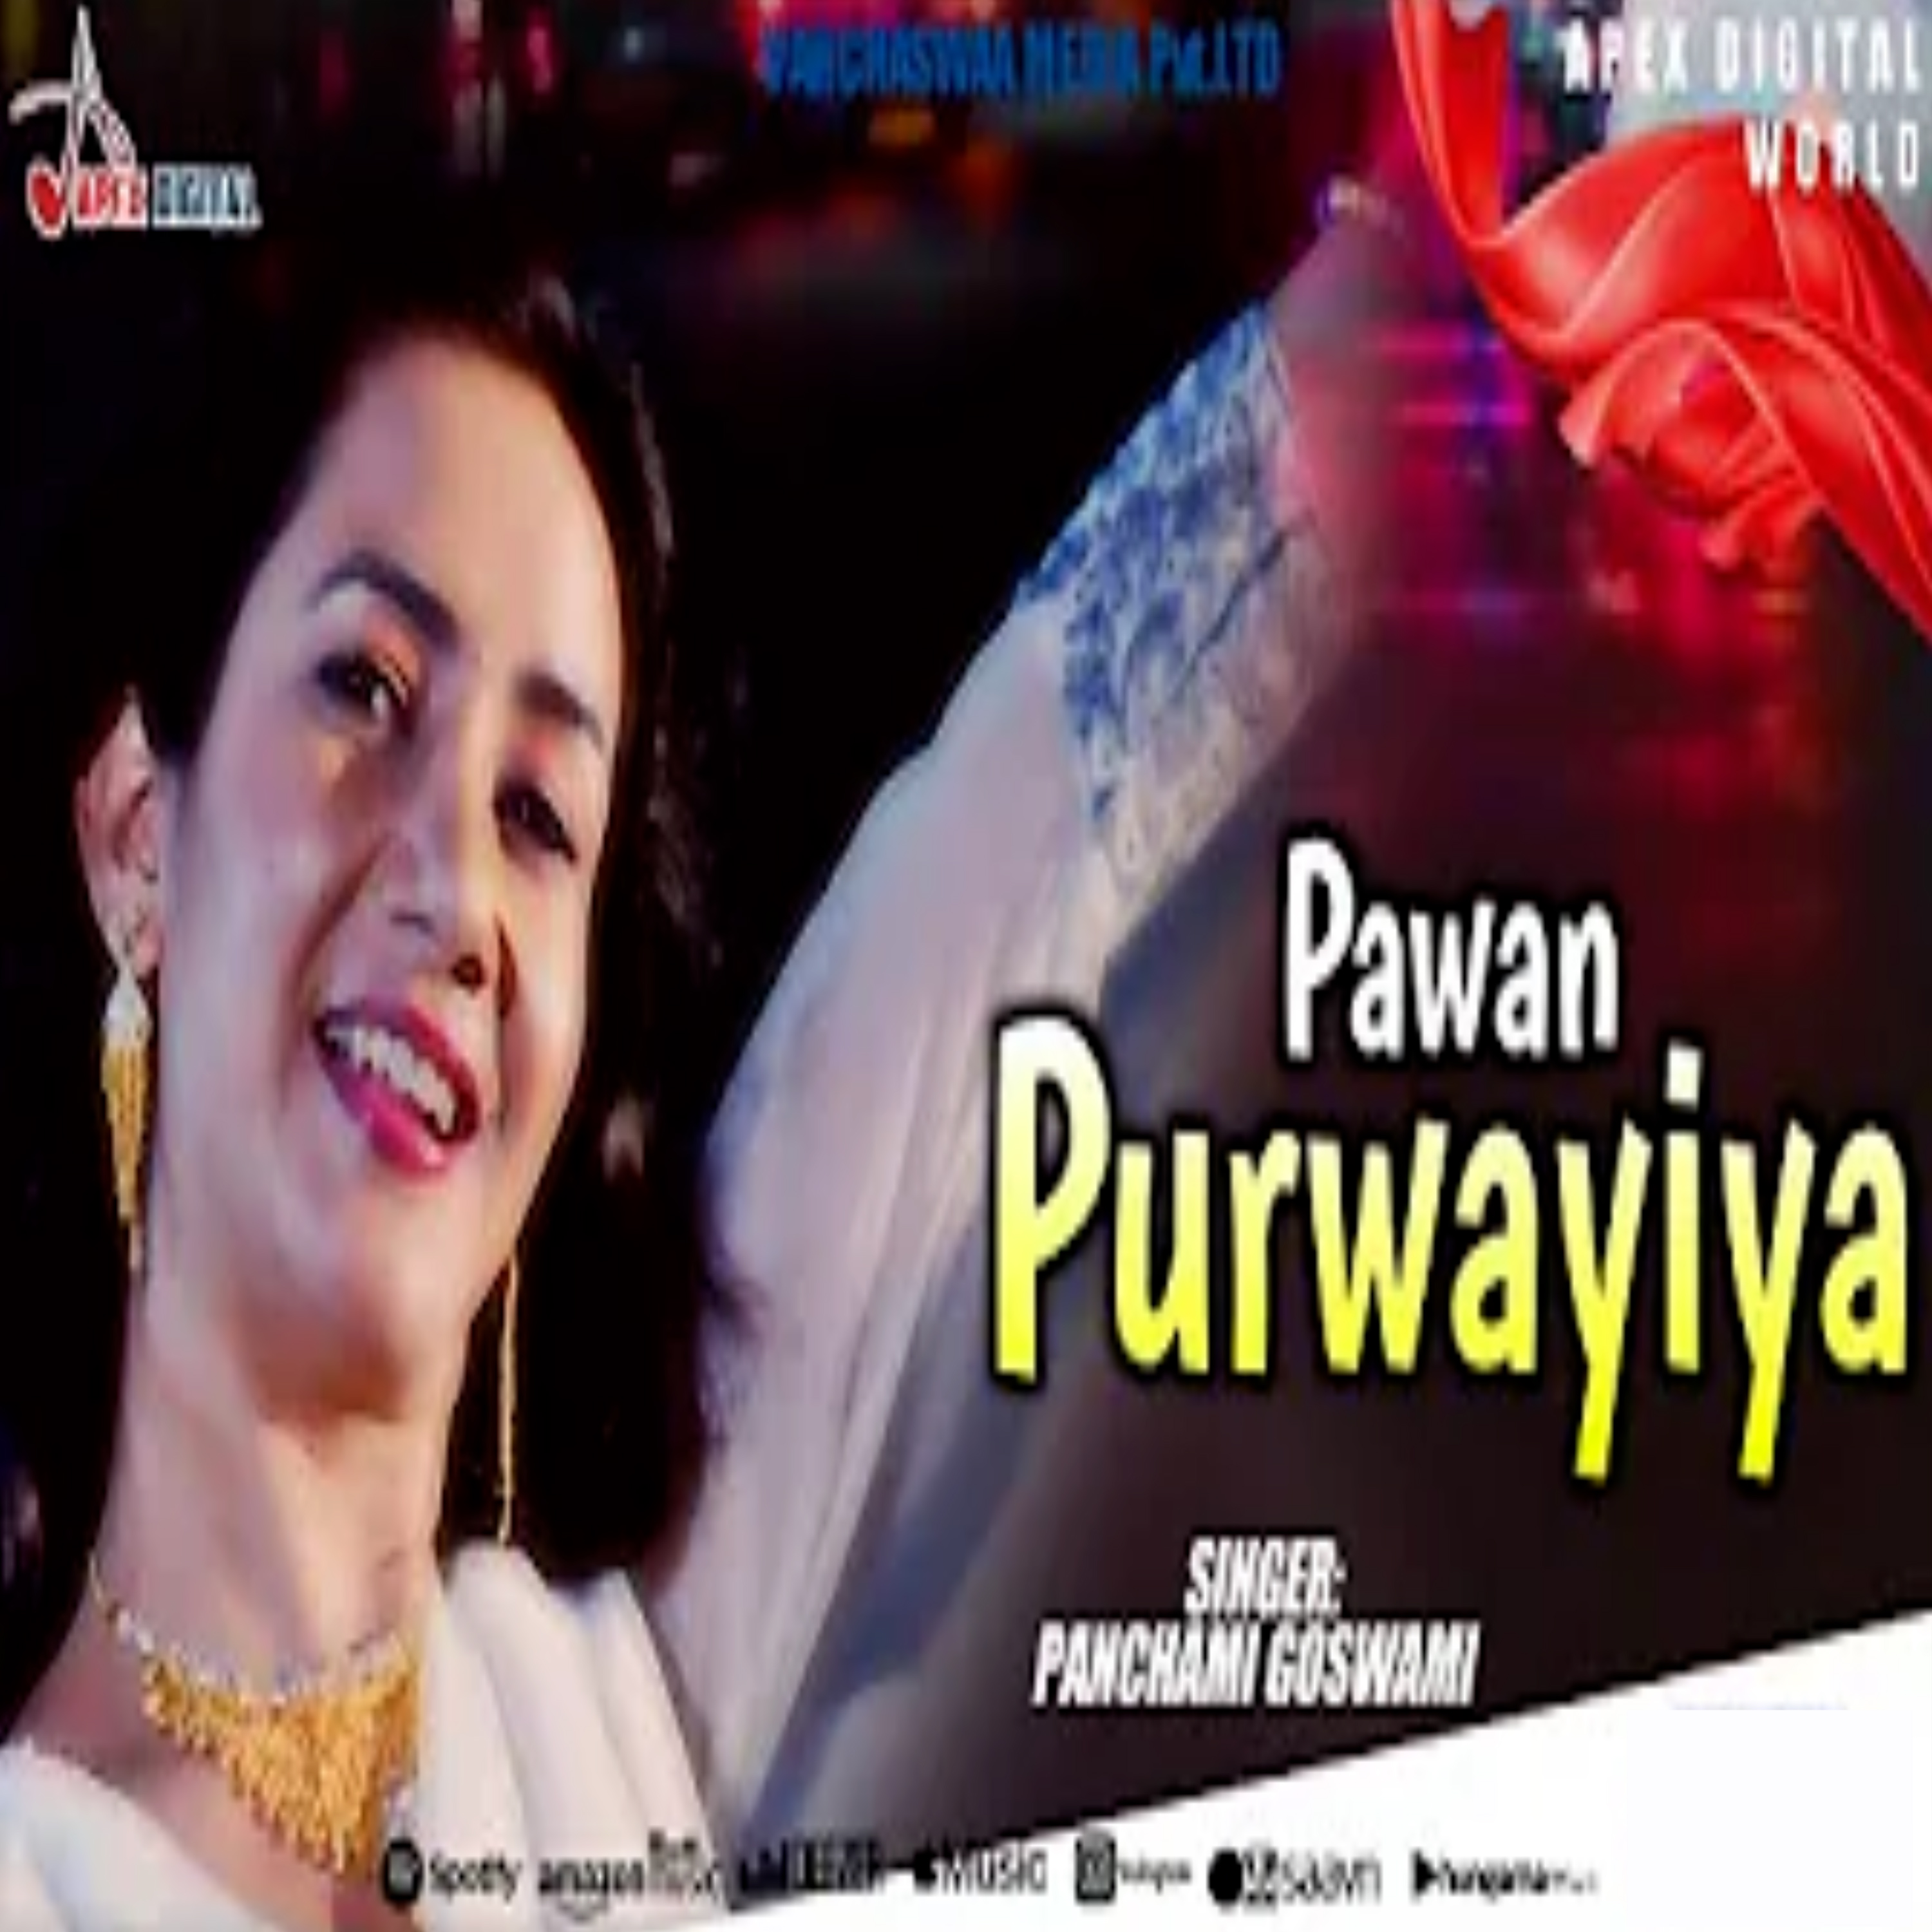 Pawan Purwayiya